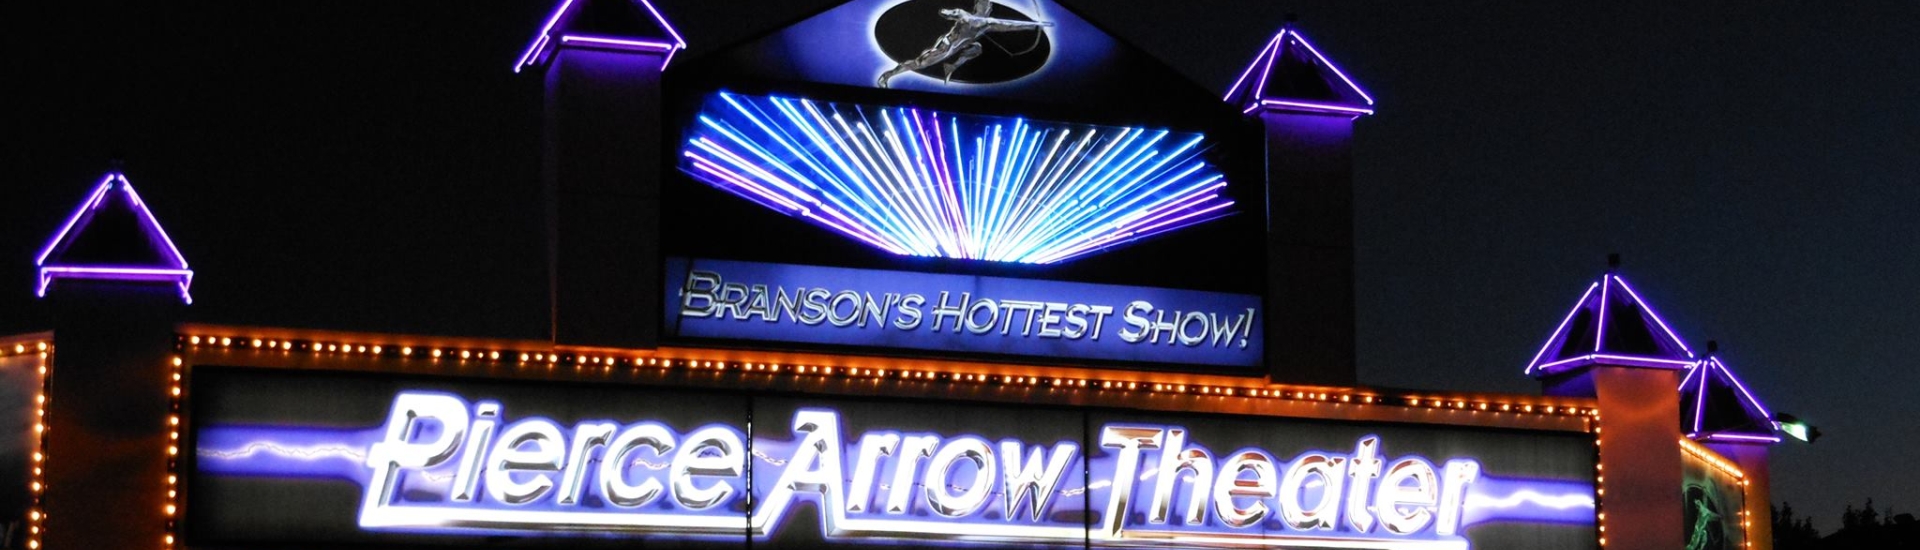 Pierce Arrow Theater in Branson, MO - 2022 Shows & Schedules